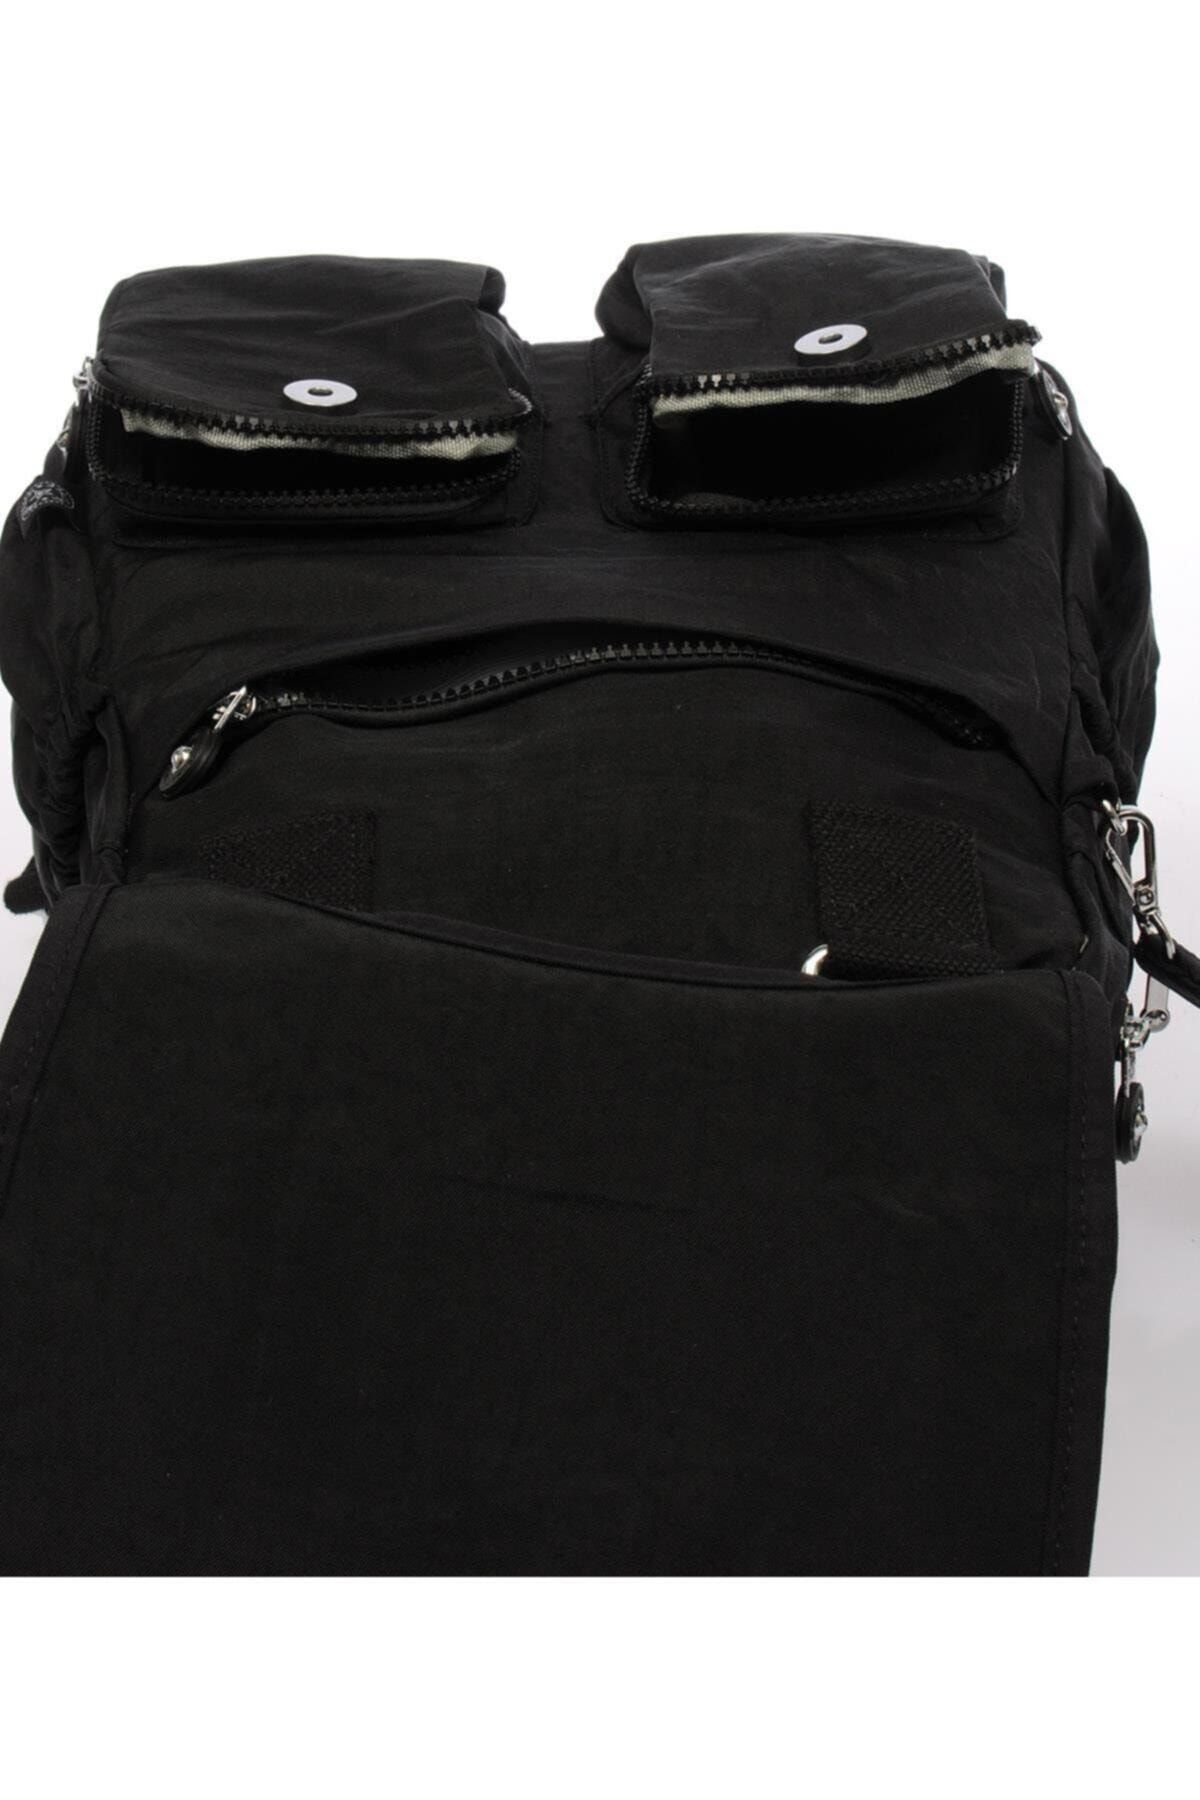 Smart Bags Smb1174 Siyah-0001 Kadın Sırt Çantası